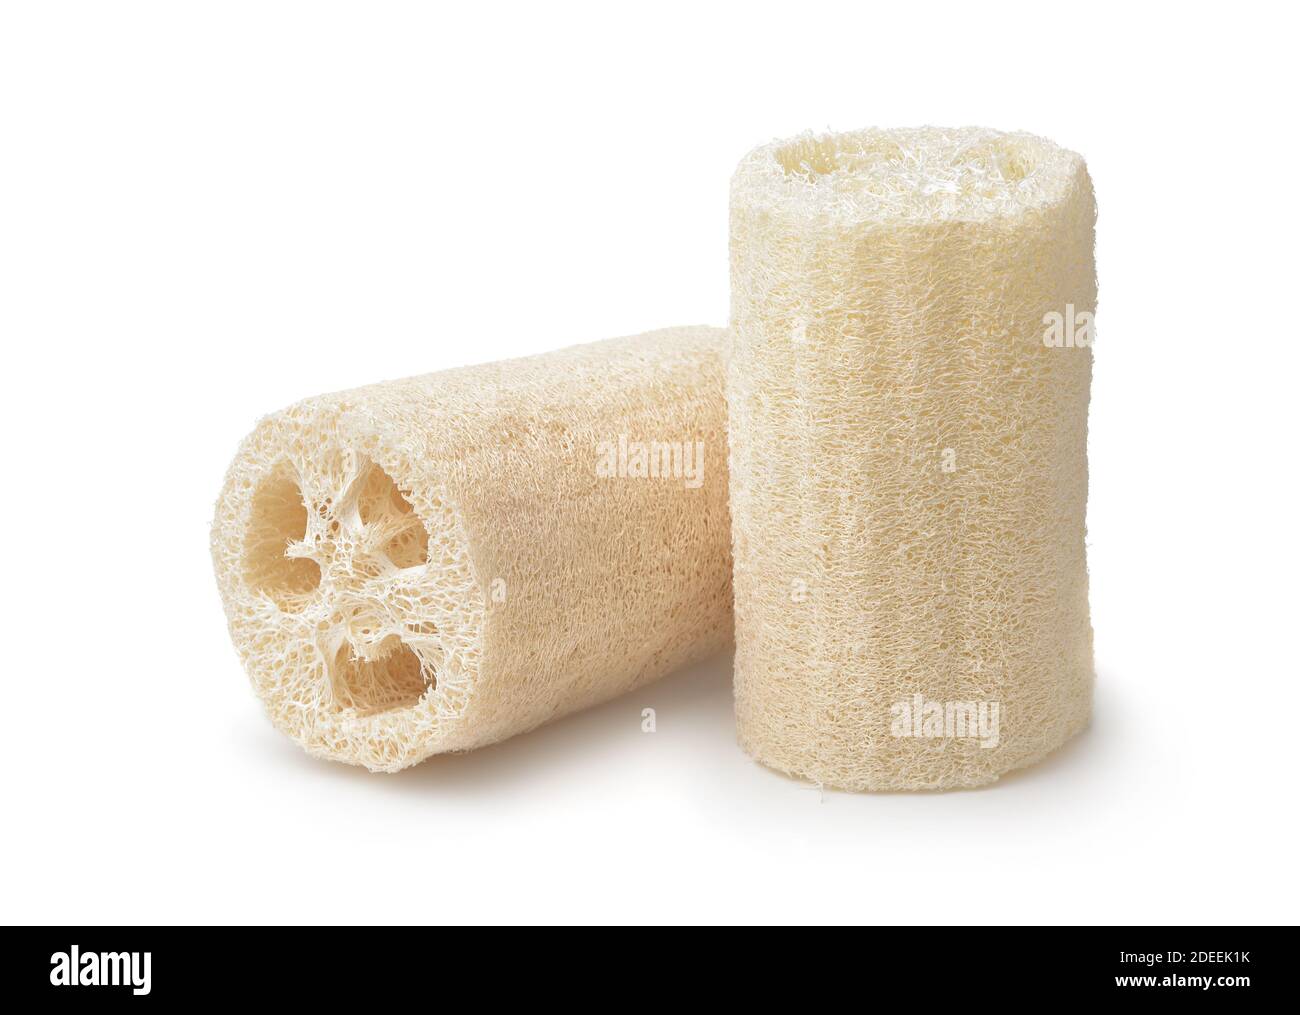 Two loofah bath scrub sponges isolated on white Stock Photo